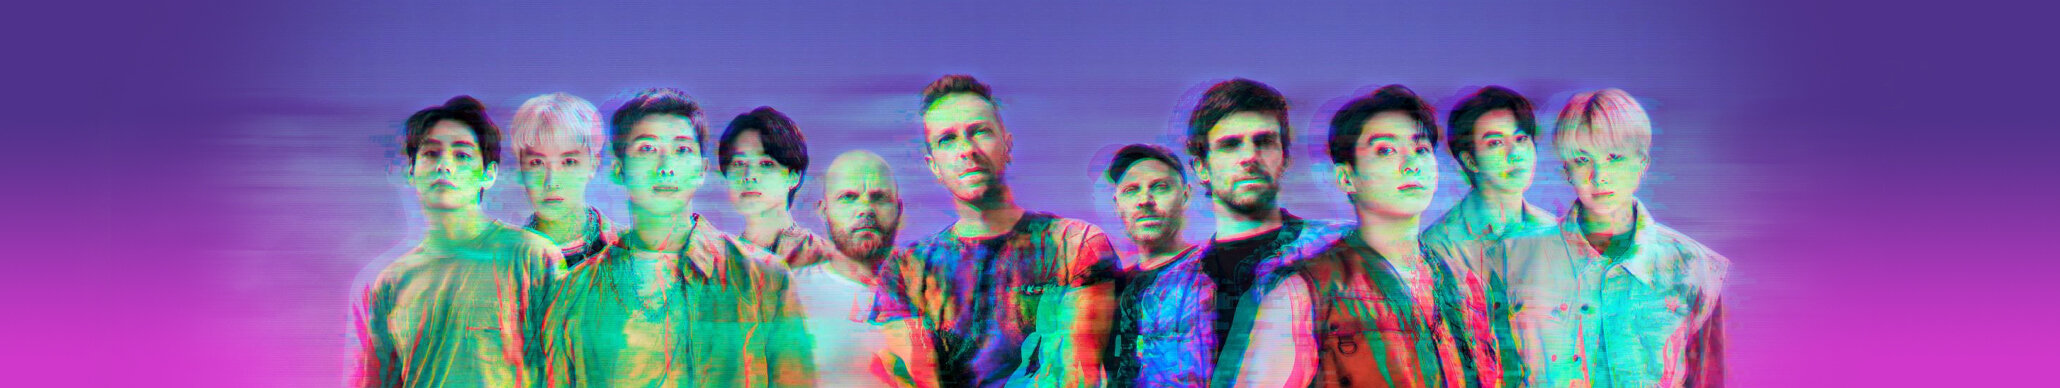 Coldplay x bts my universe